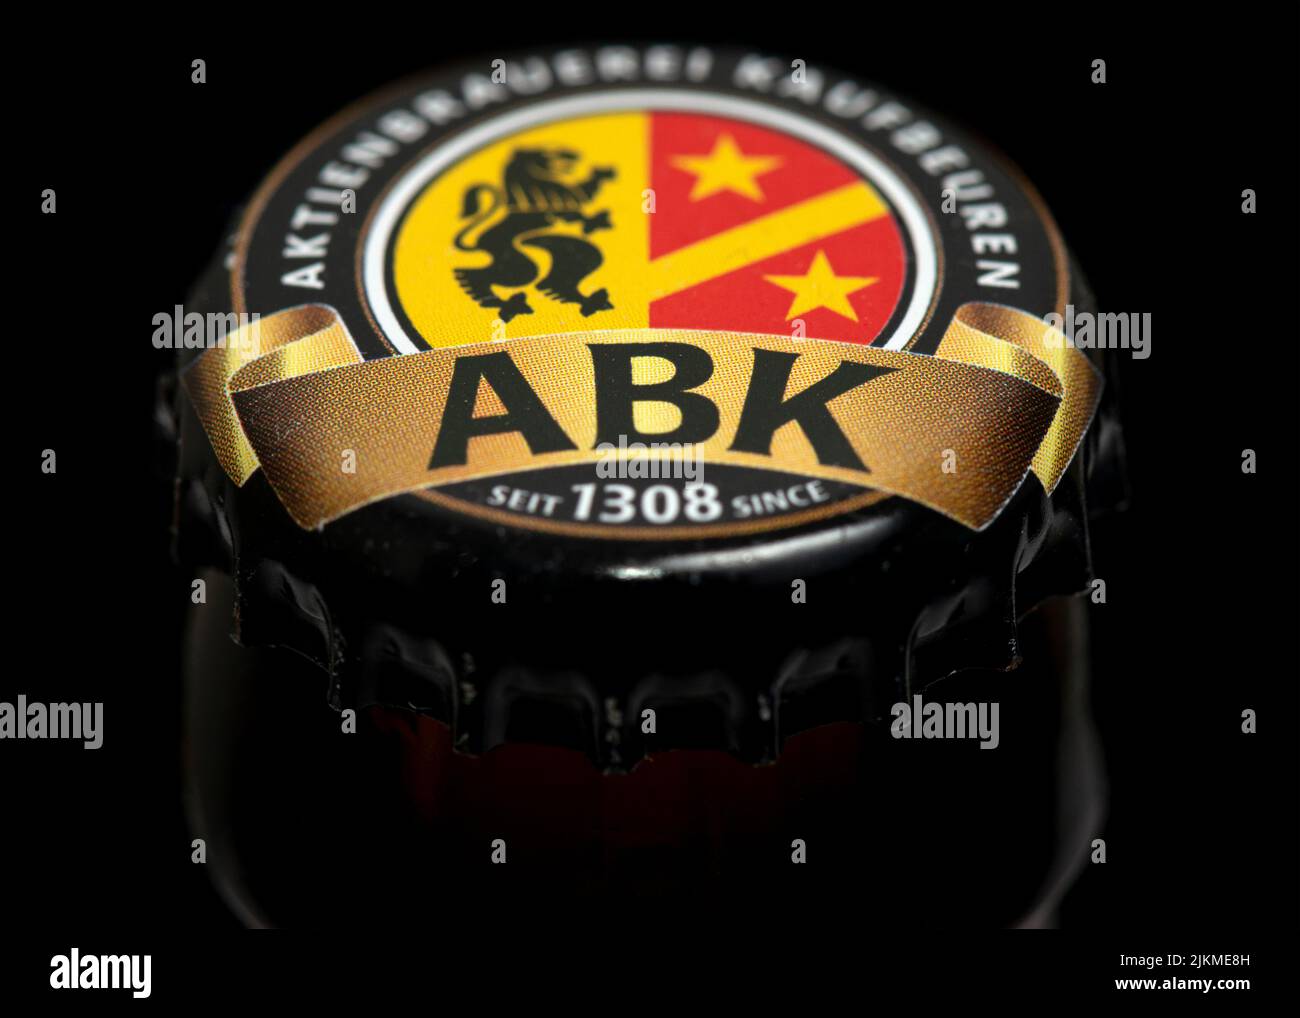 ABK Edel German lager beer bottle top cap close up detail Stock Photo